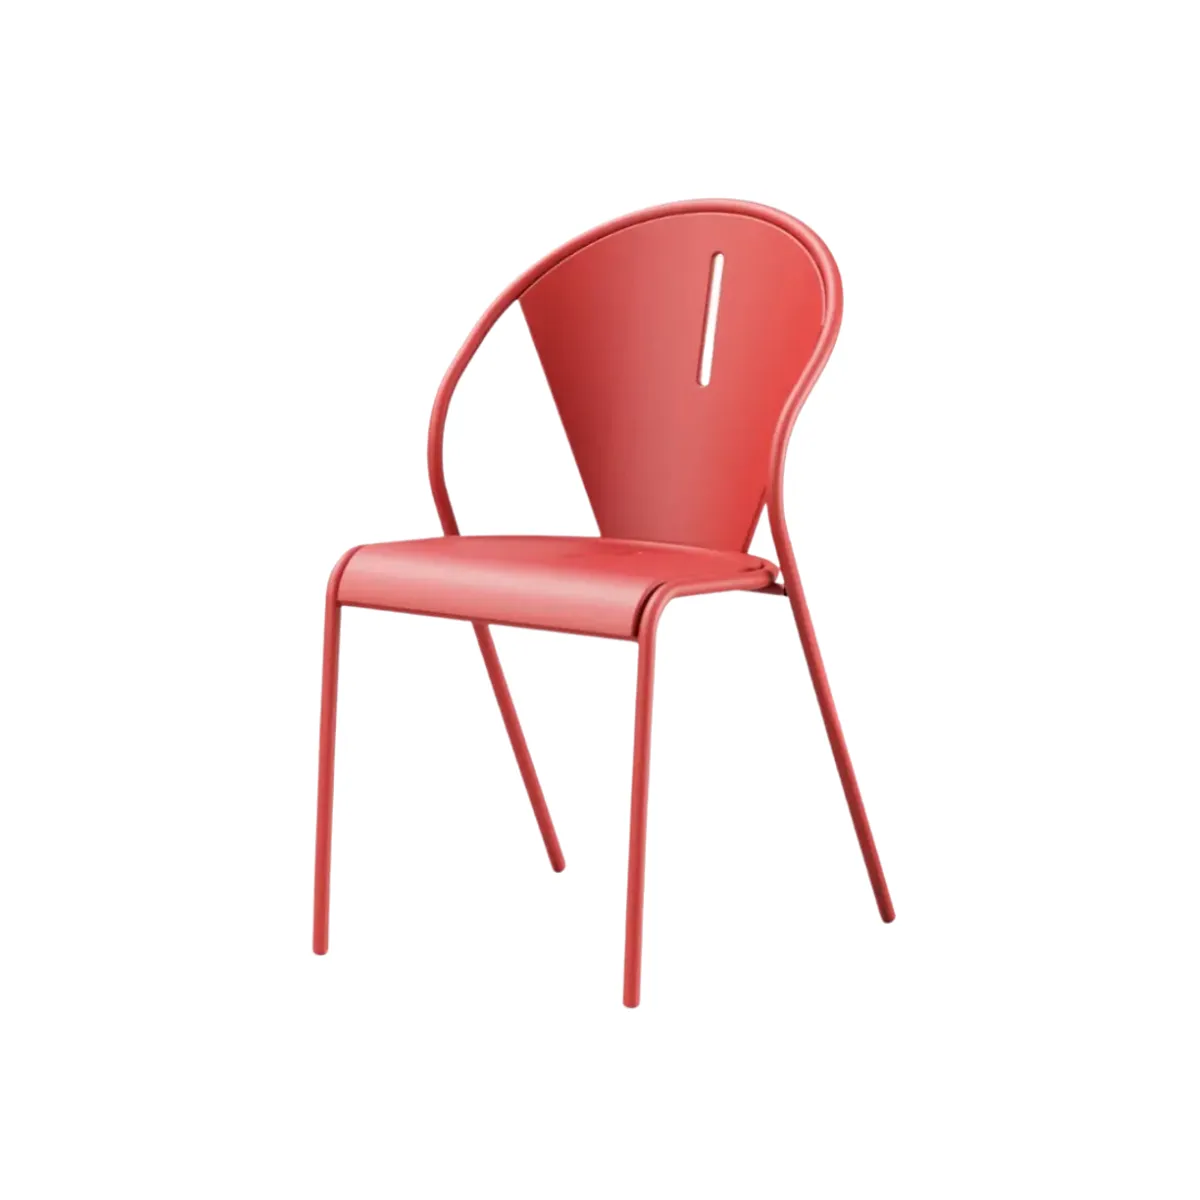 Decoda side chair 1